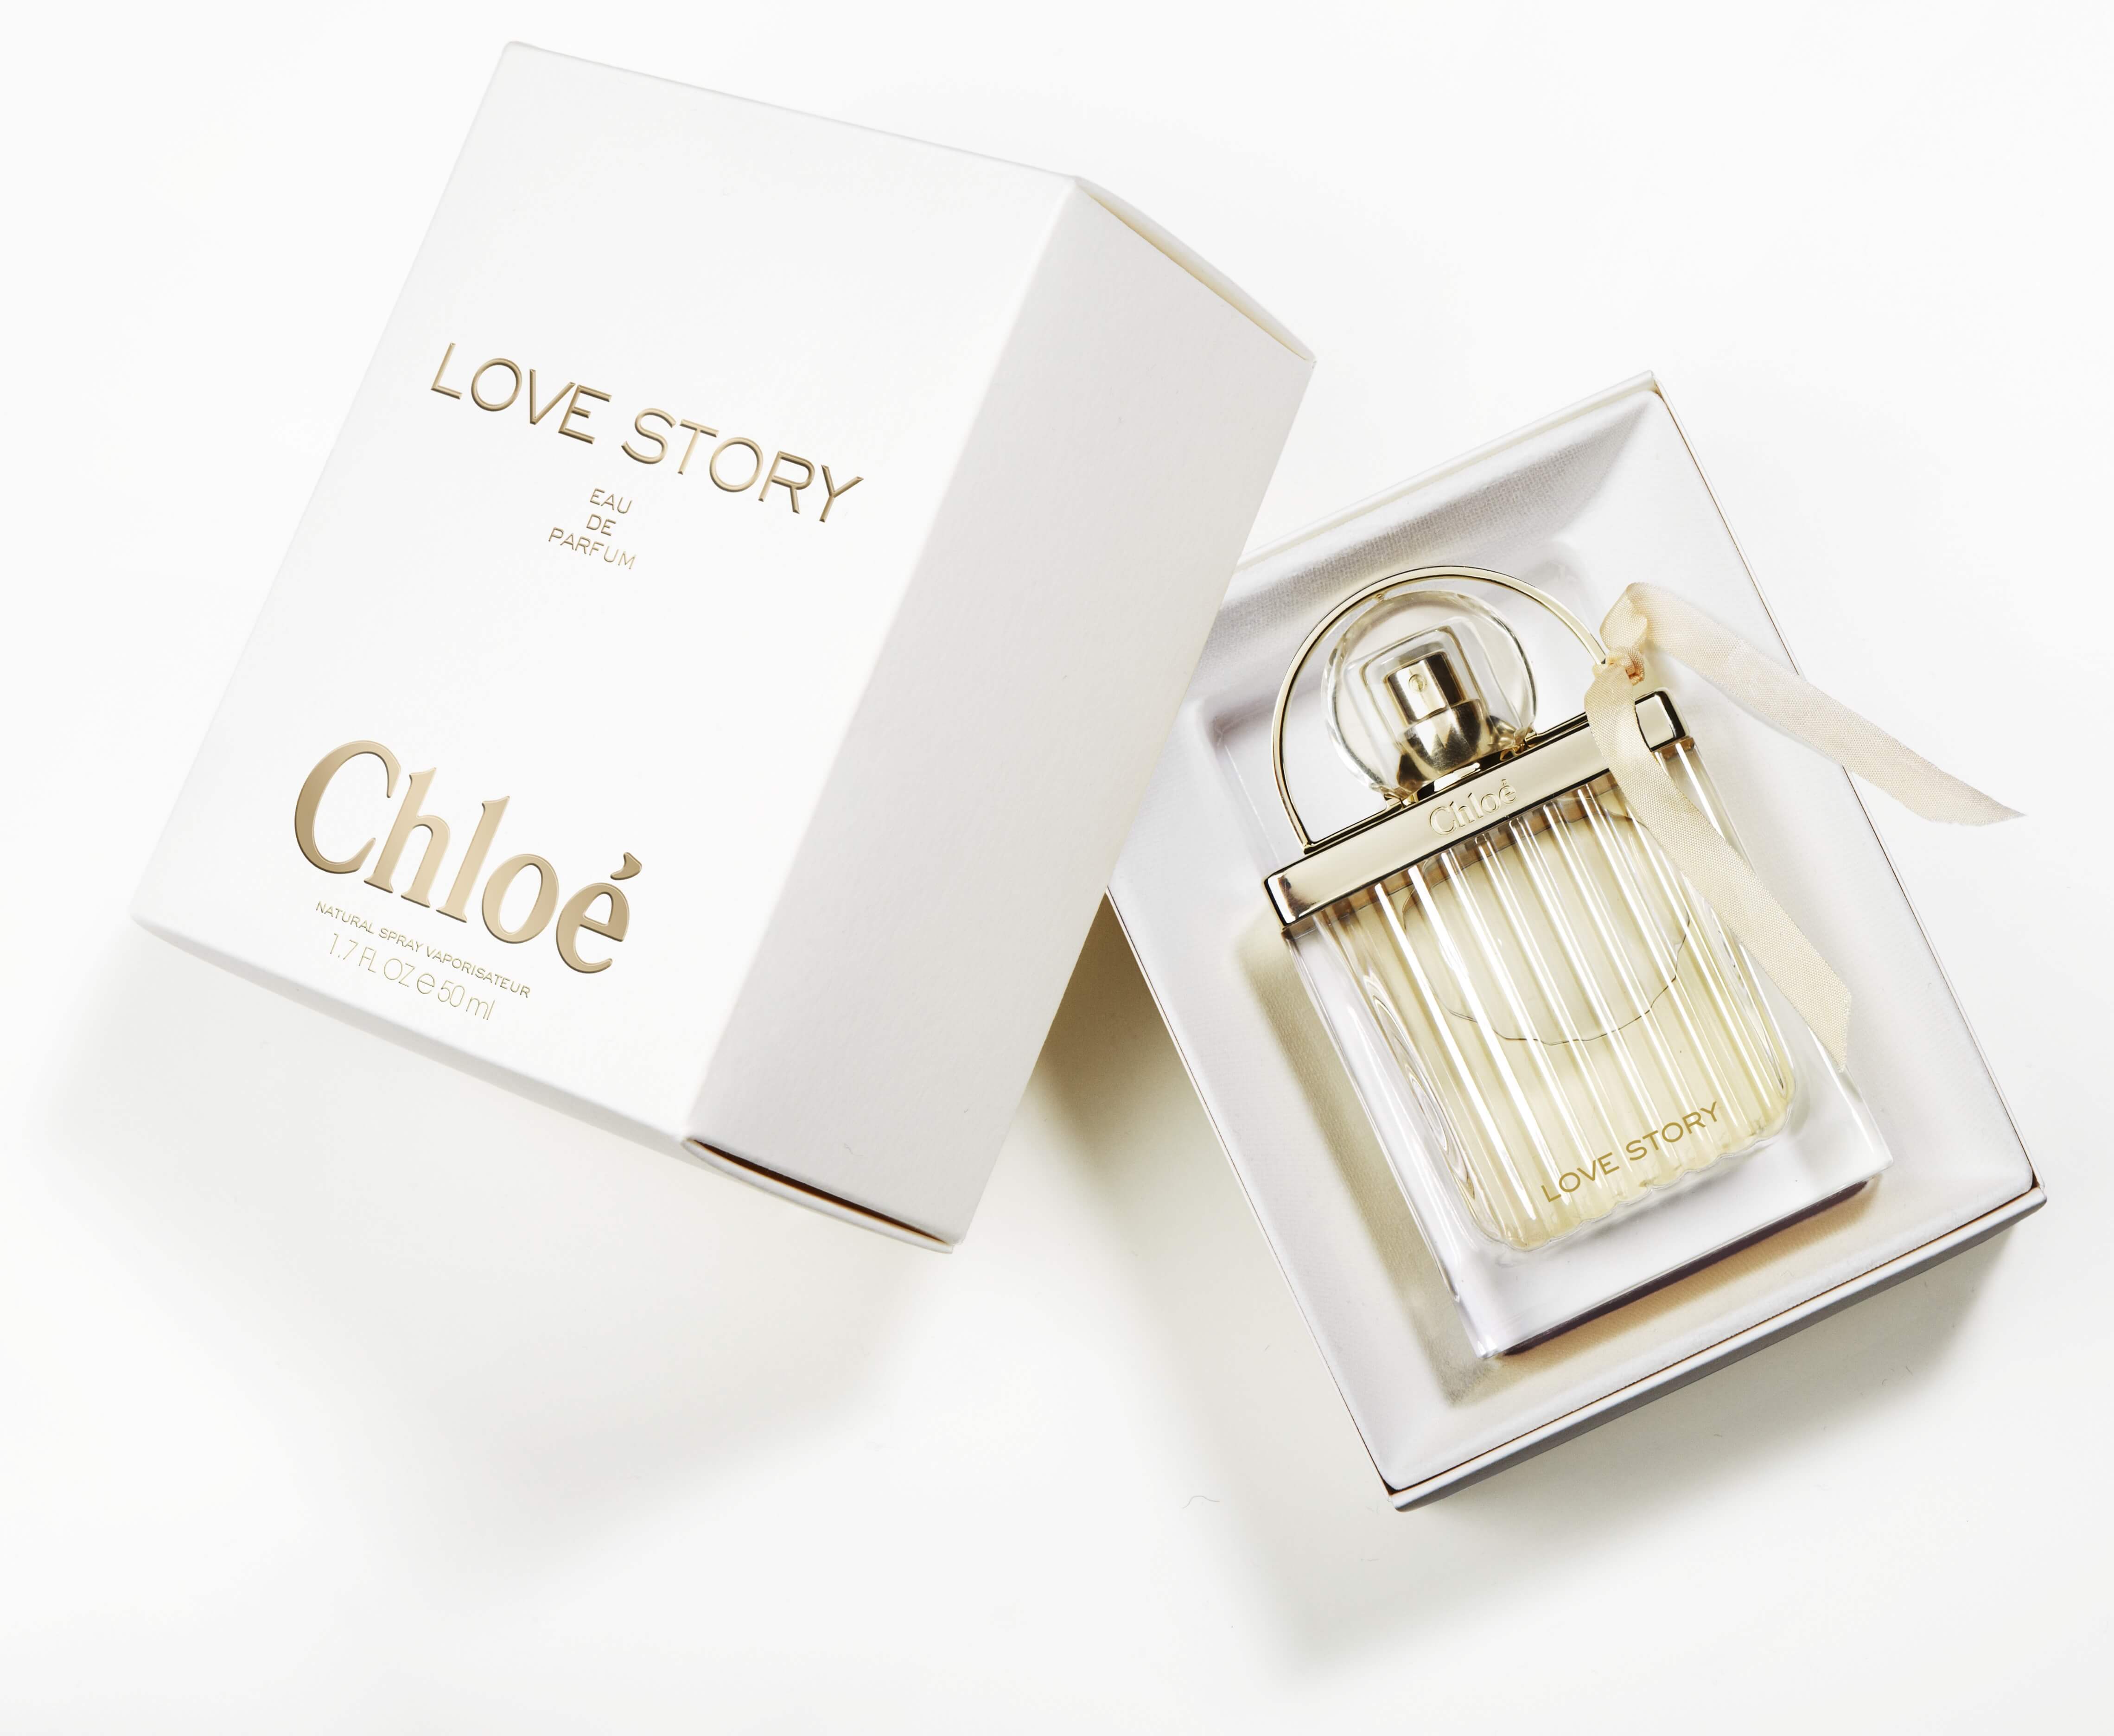 Chloé Fragrance Chloé Signature Eau De Parfum Lookfantastic 5028